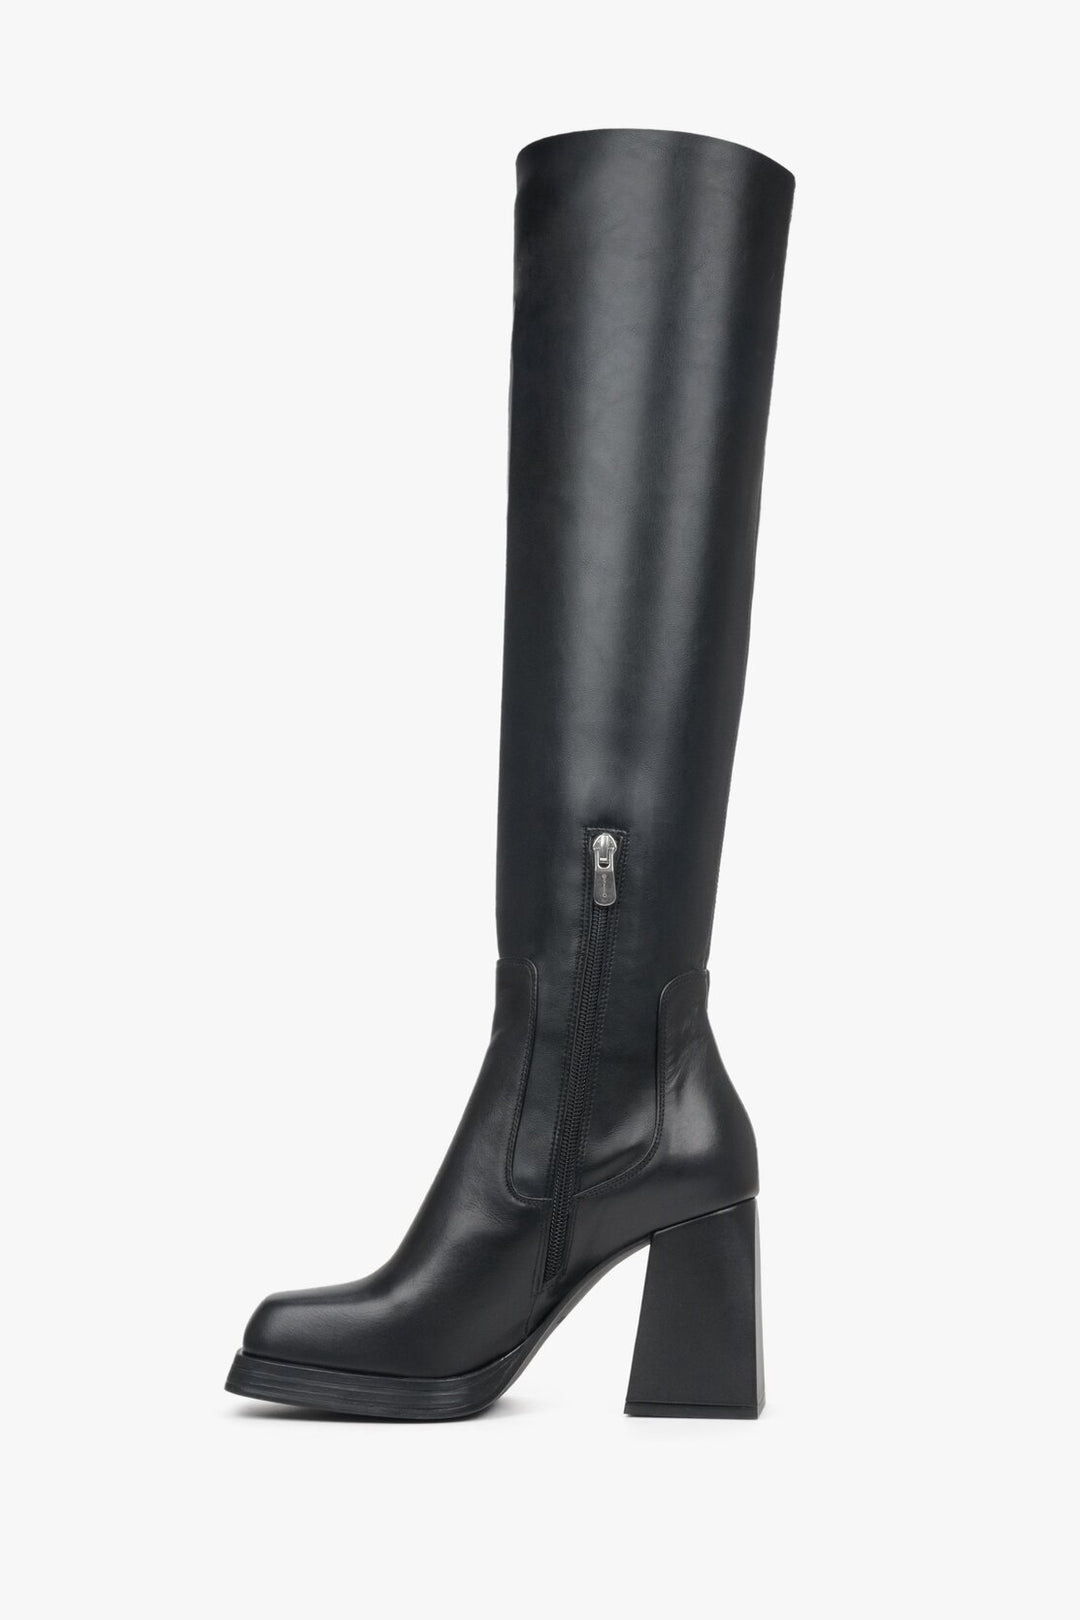 Stylish knee high boots made of black genuine leather Estro - shoe profile.